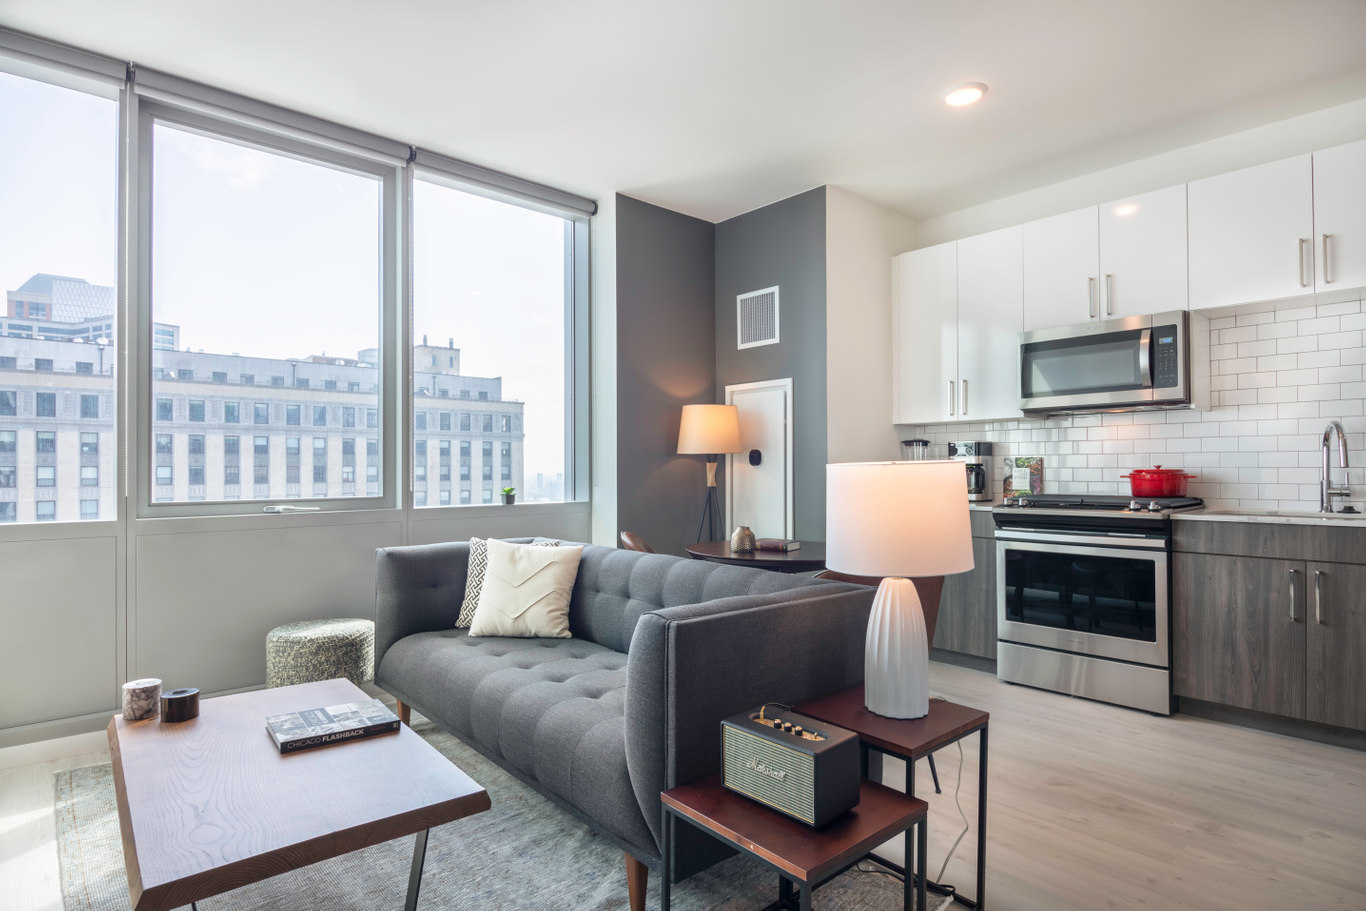 condos for rent chicago modern kitchenette with white tile backsplash